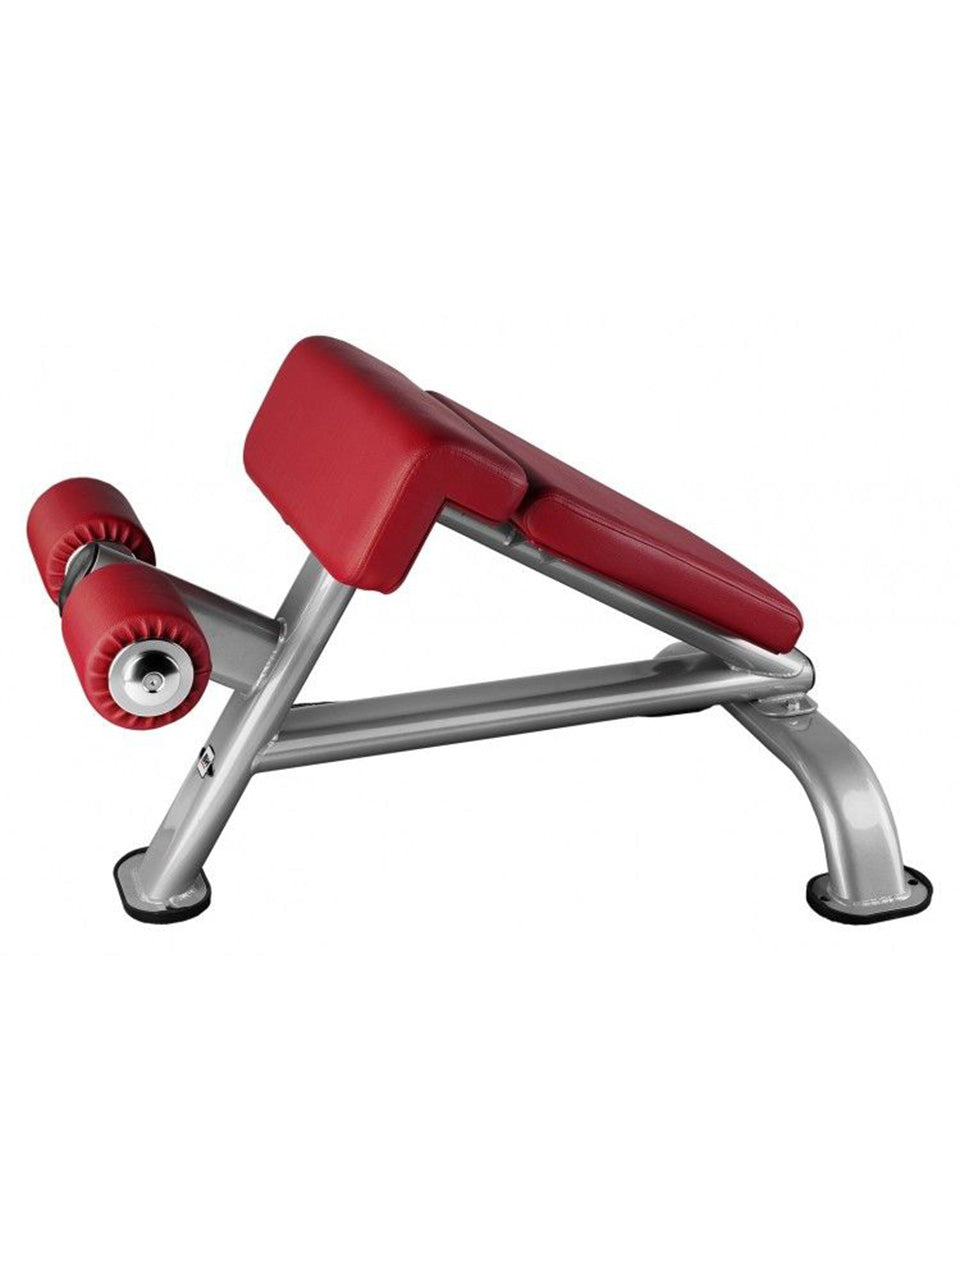 BH Fitness Roman Chair L840| Prosportsae| Prosportsae